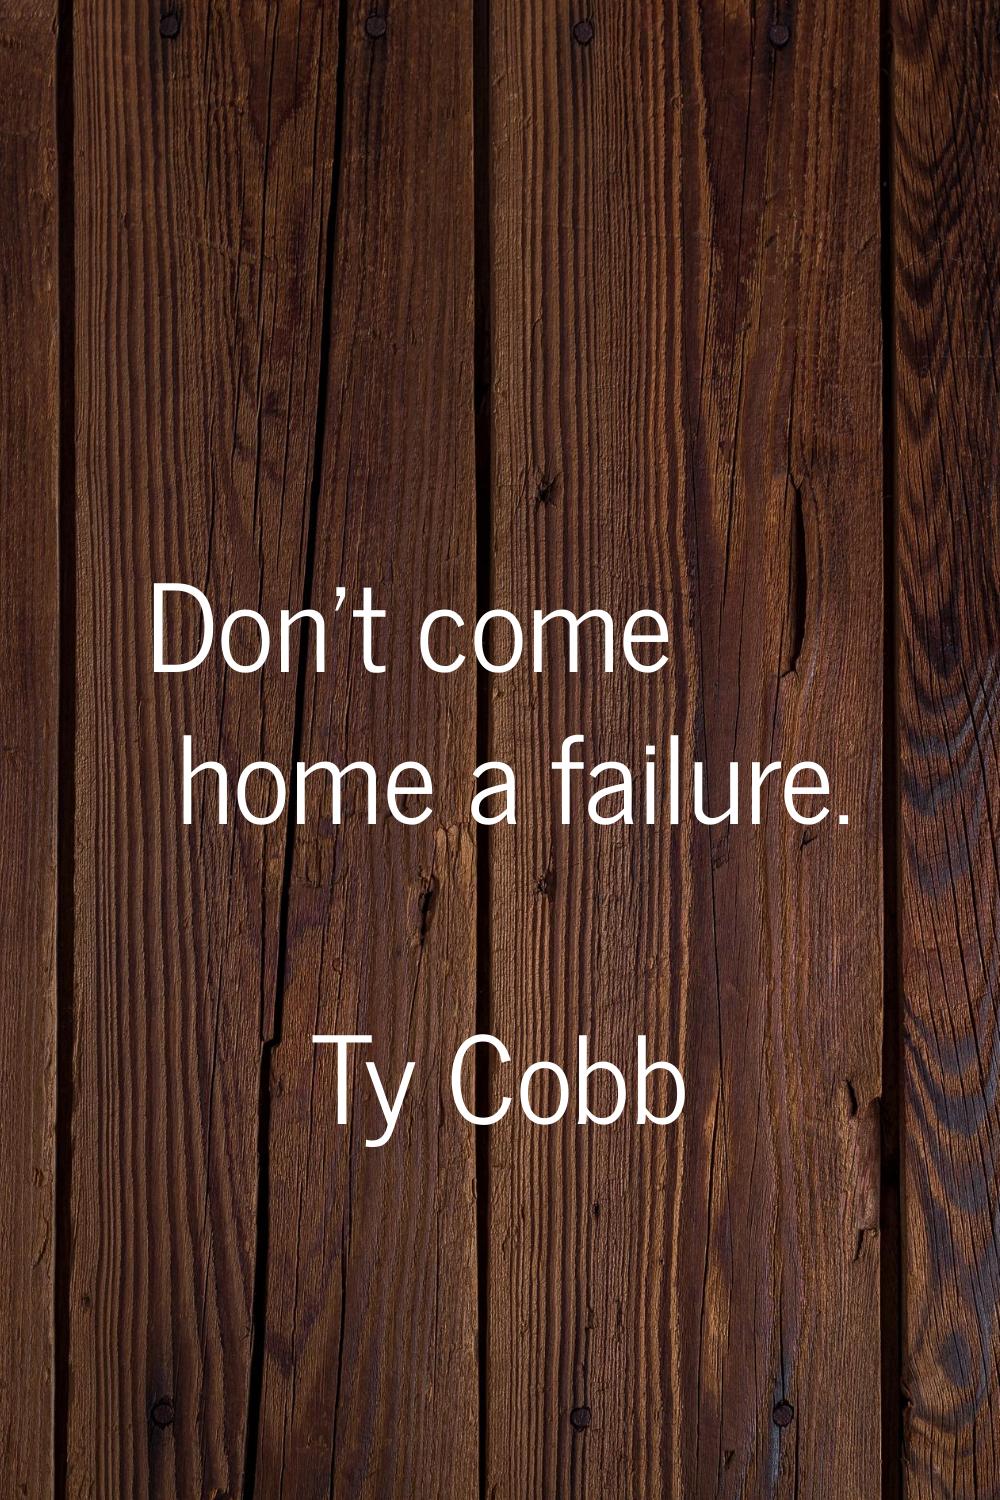 Don't come home a failure.